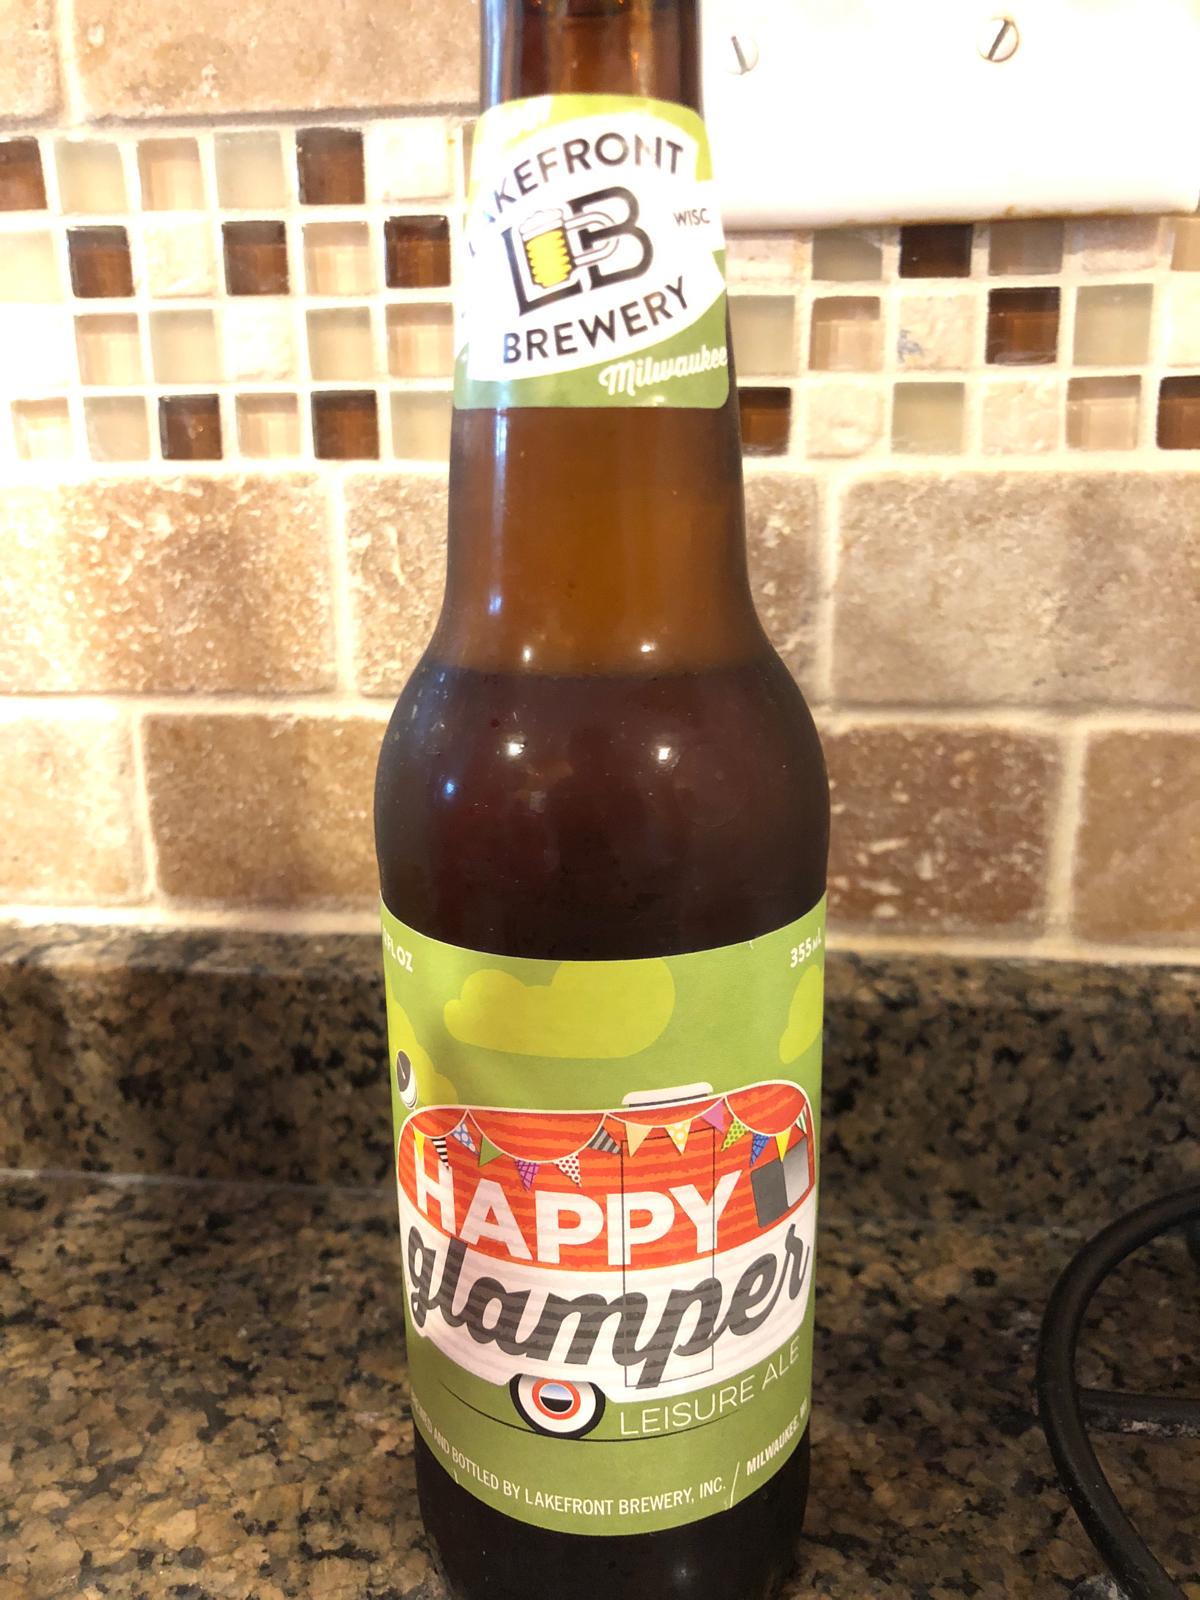 Happy Glamper Leisure Ale